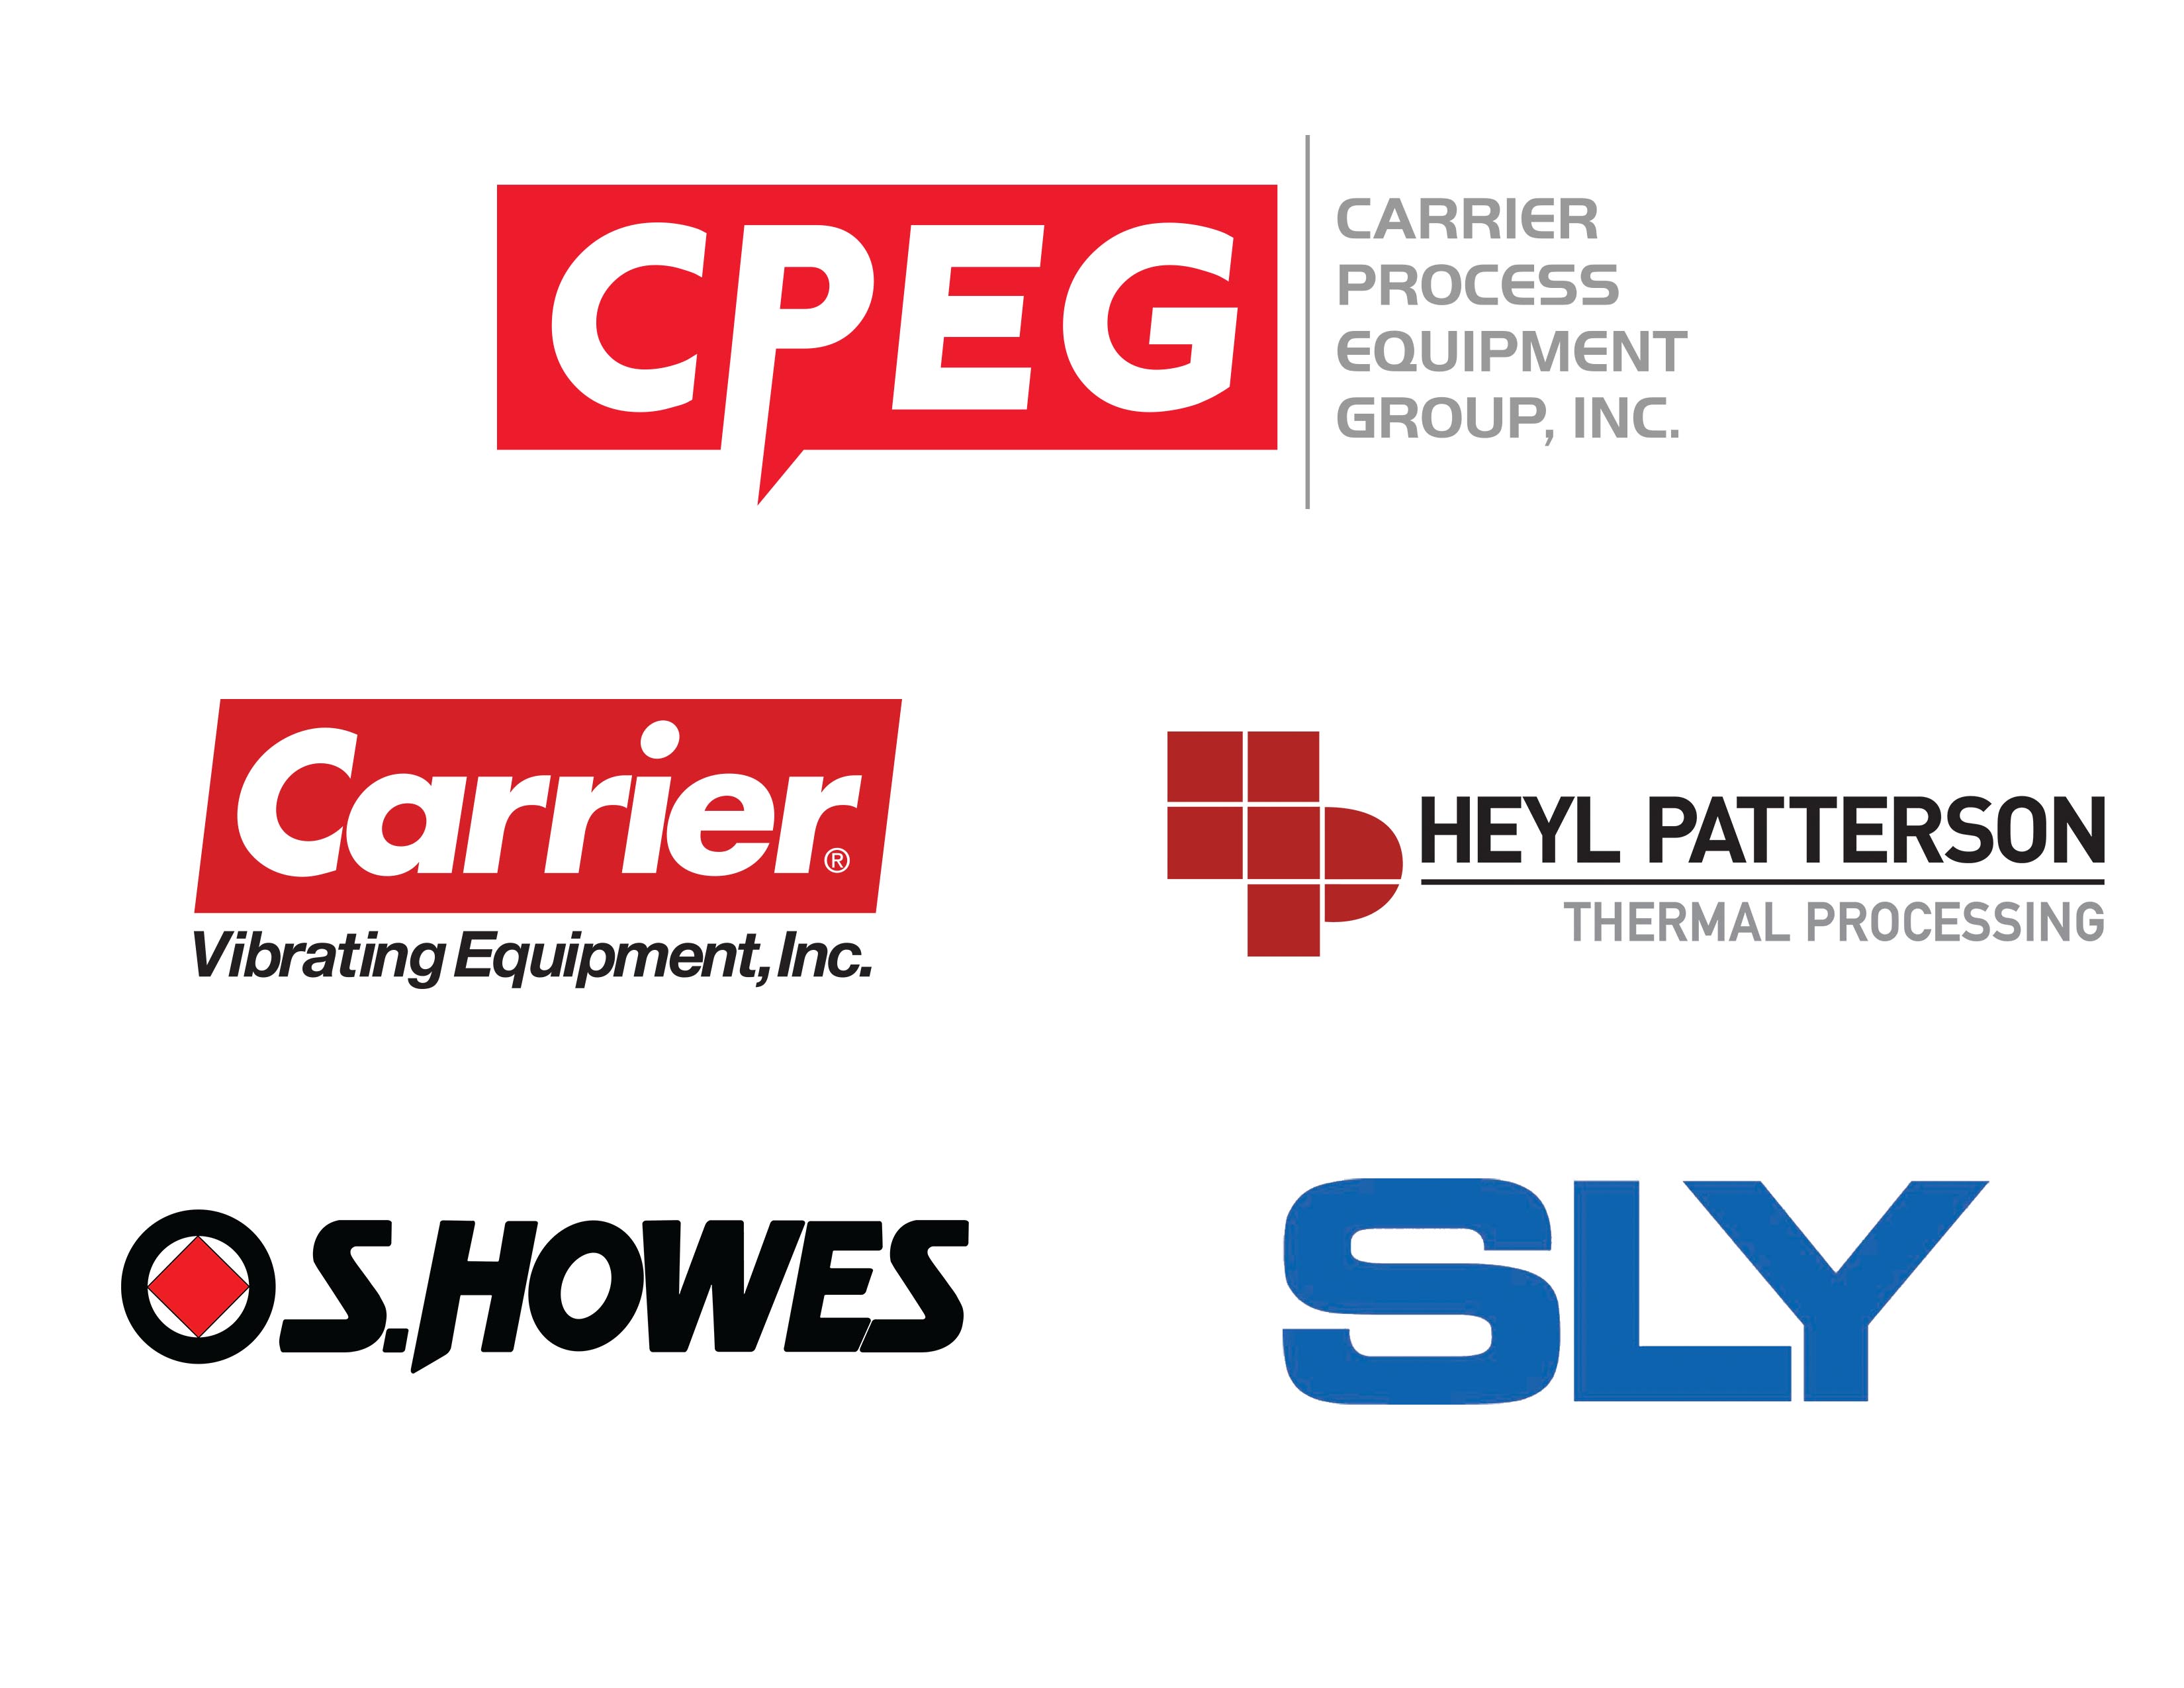 Carrier Process Equipment Group